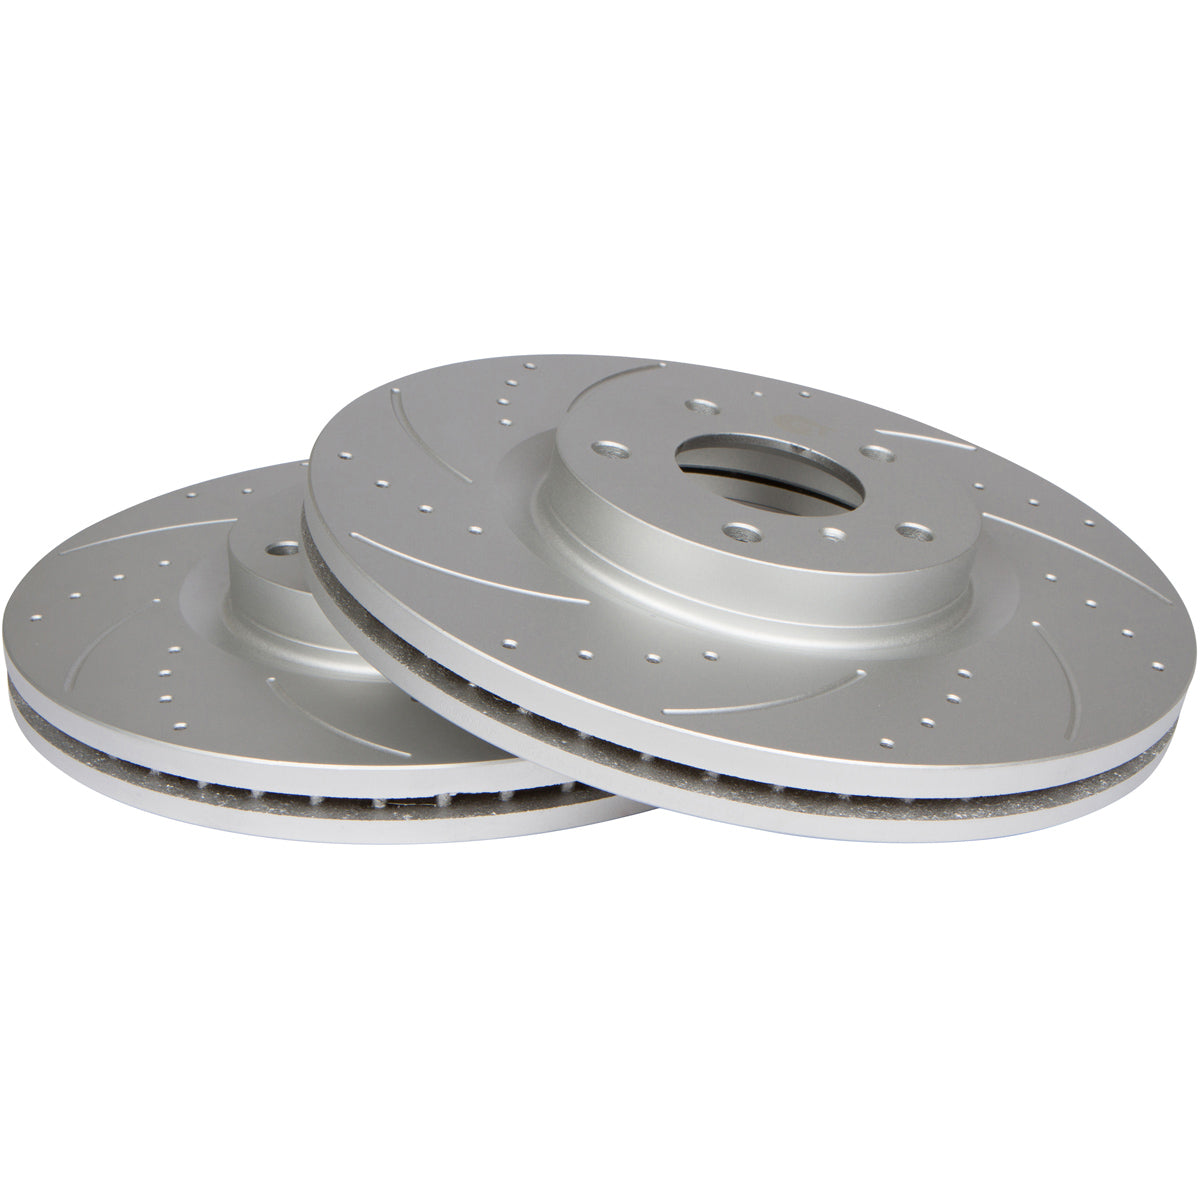 Kia Optima 2011 - 2015 Disc Brake Rotors & Ceramic Brake Pads